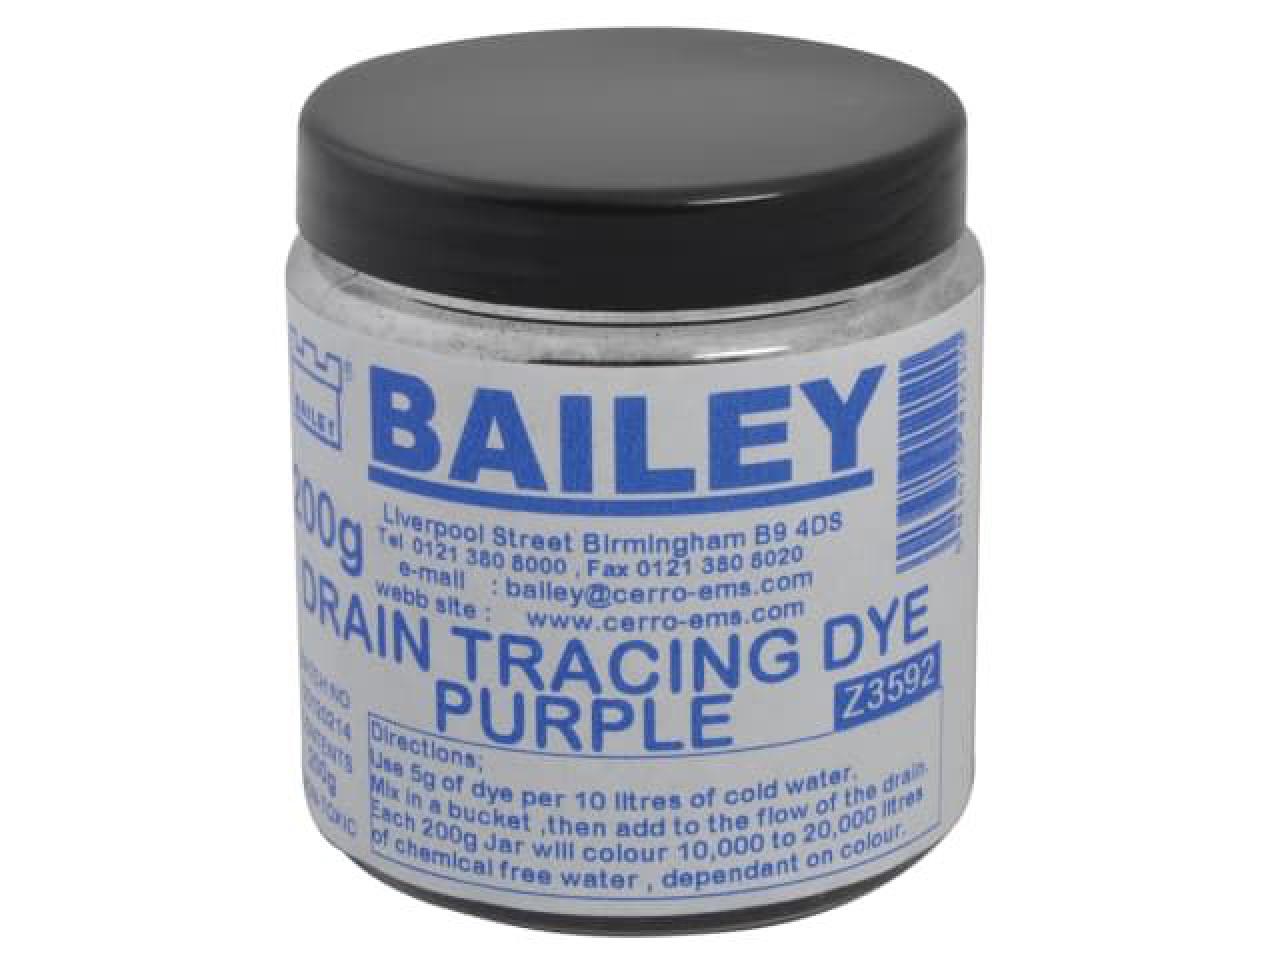 Bailey - 3592 Drain Tracing Dye - Purple 